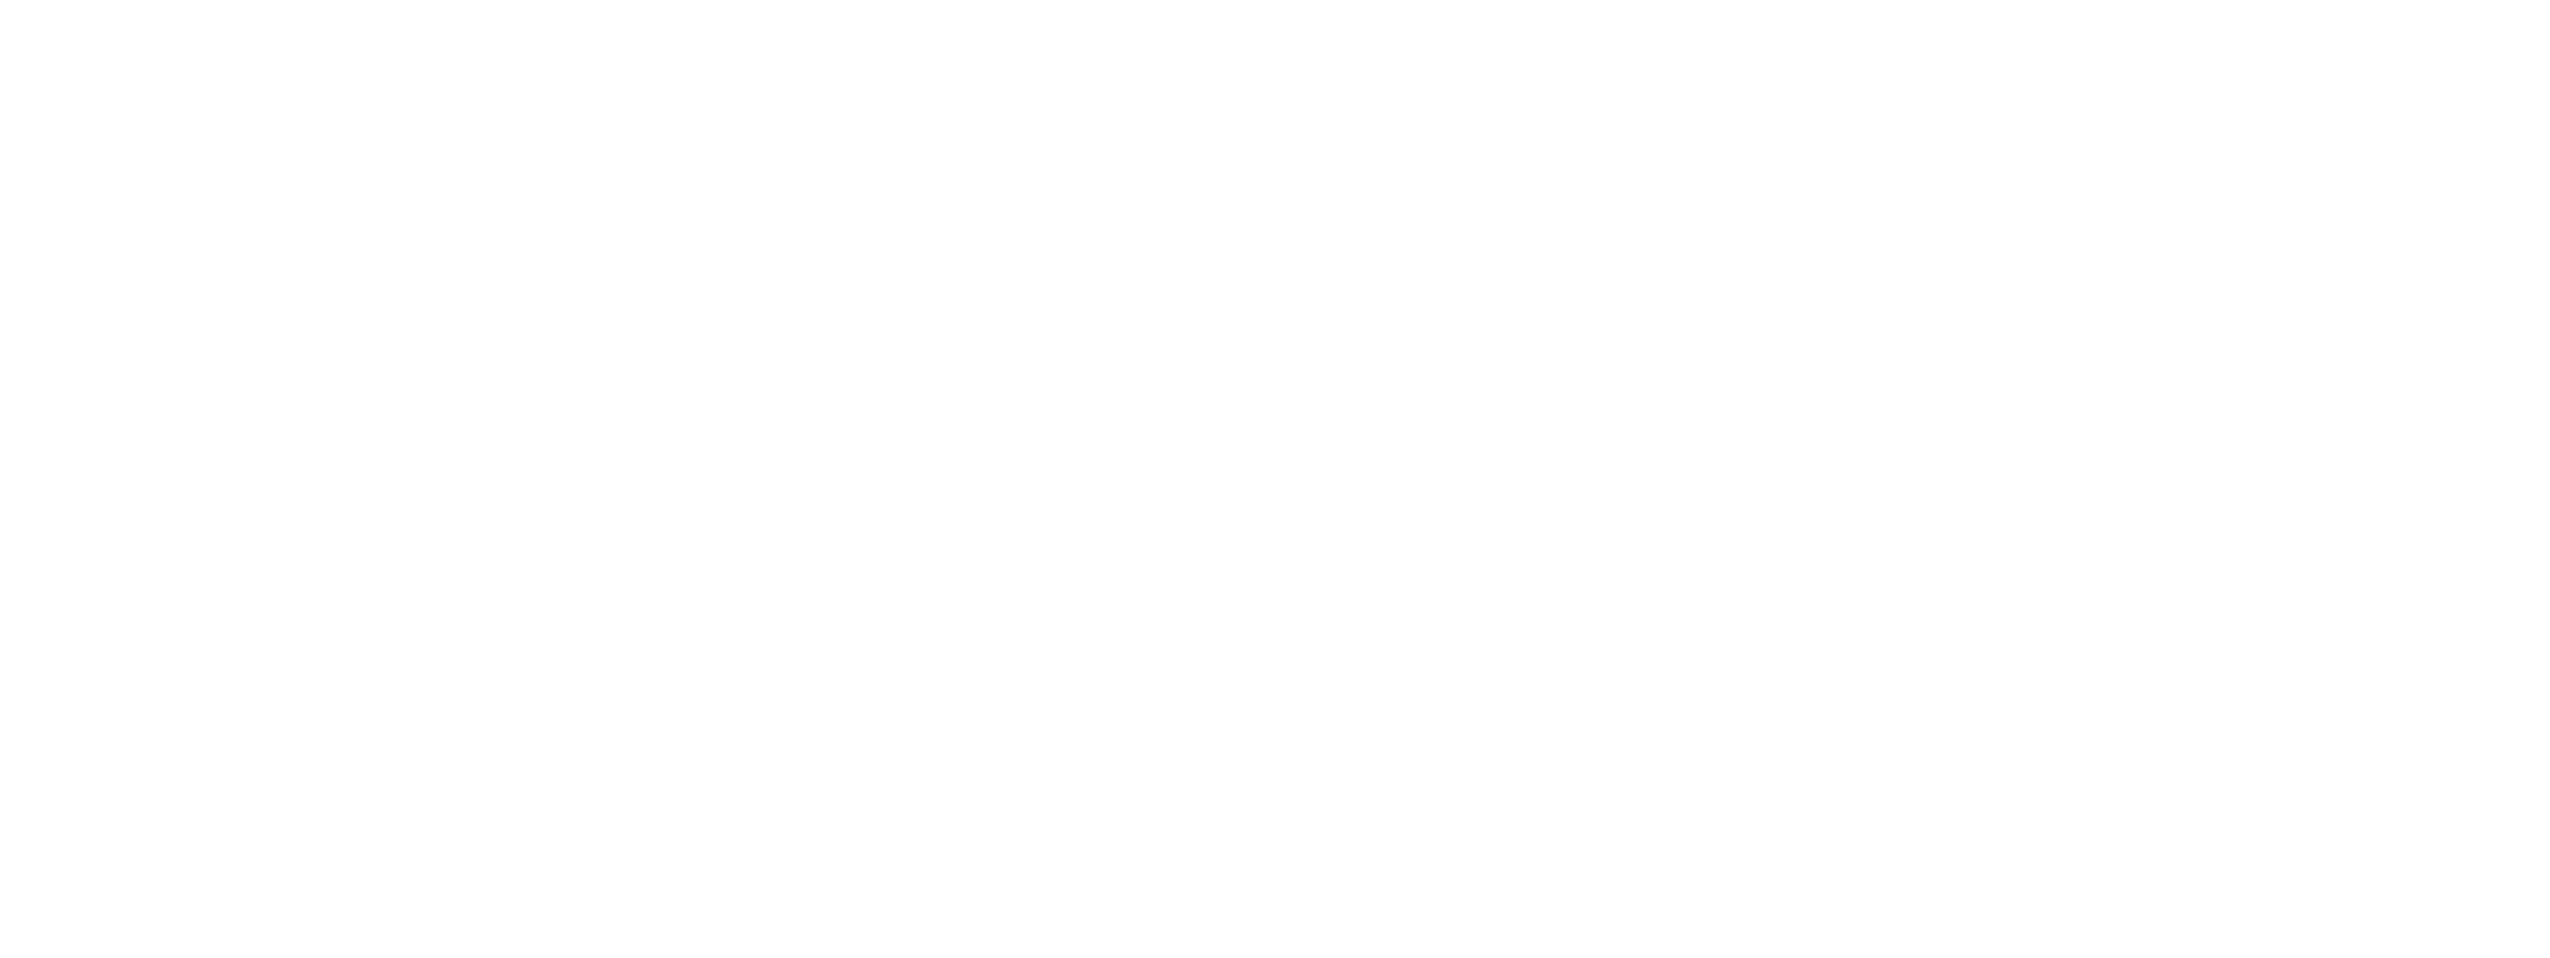 Boston Turner Group